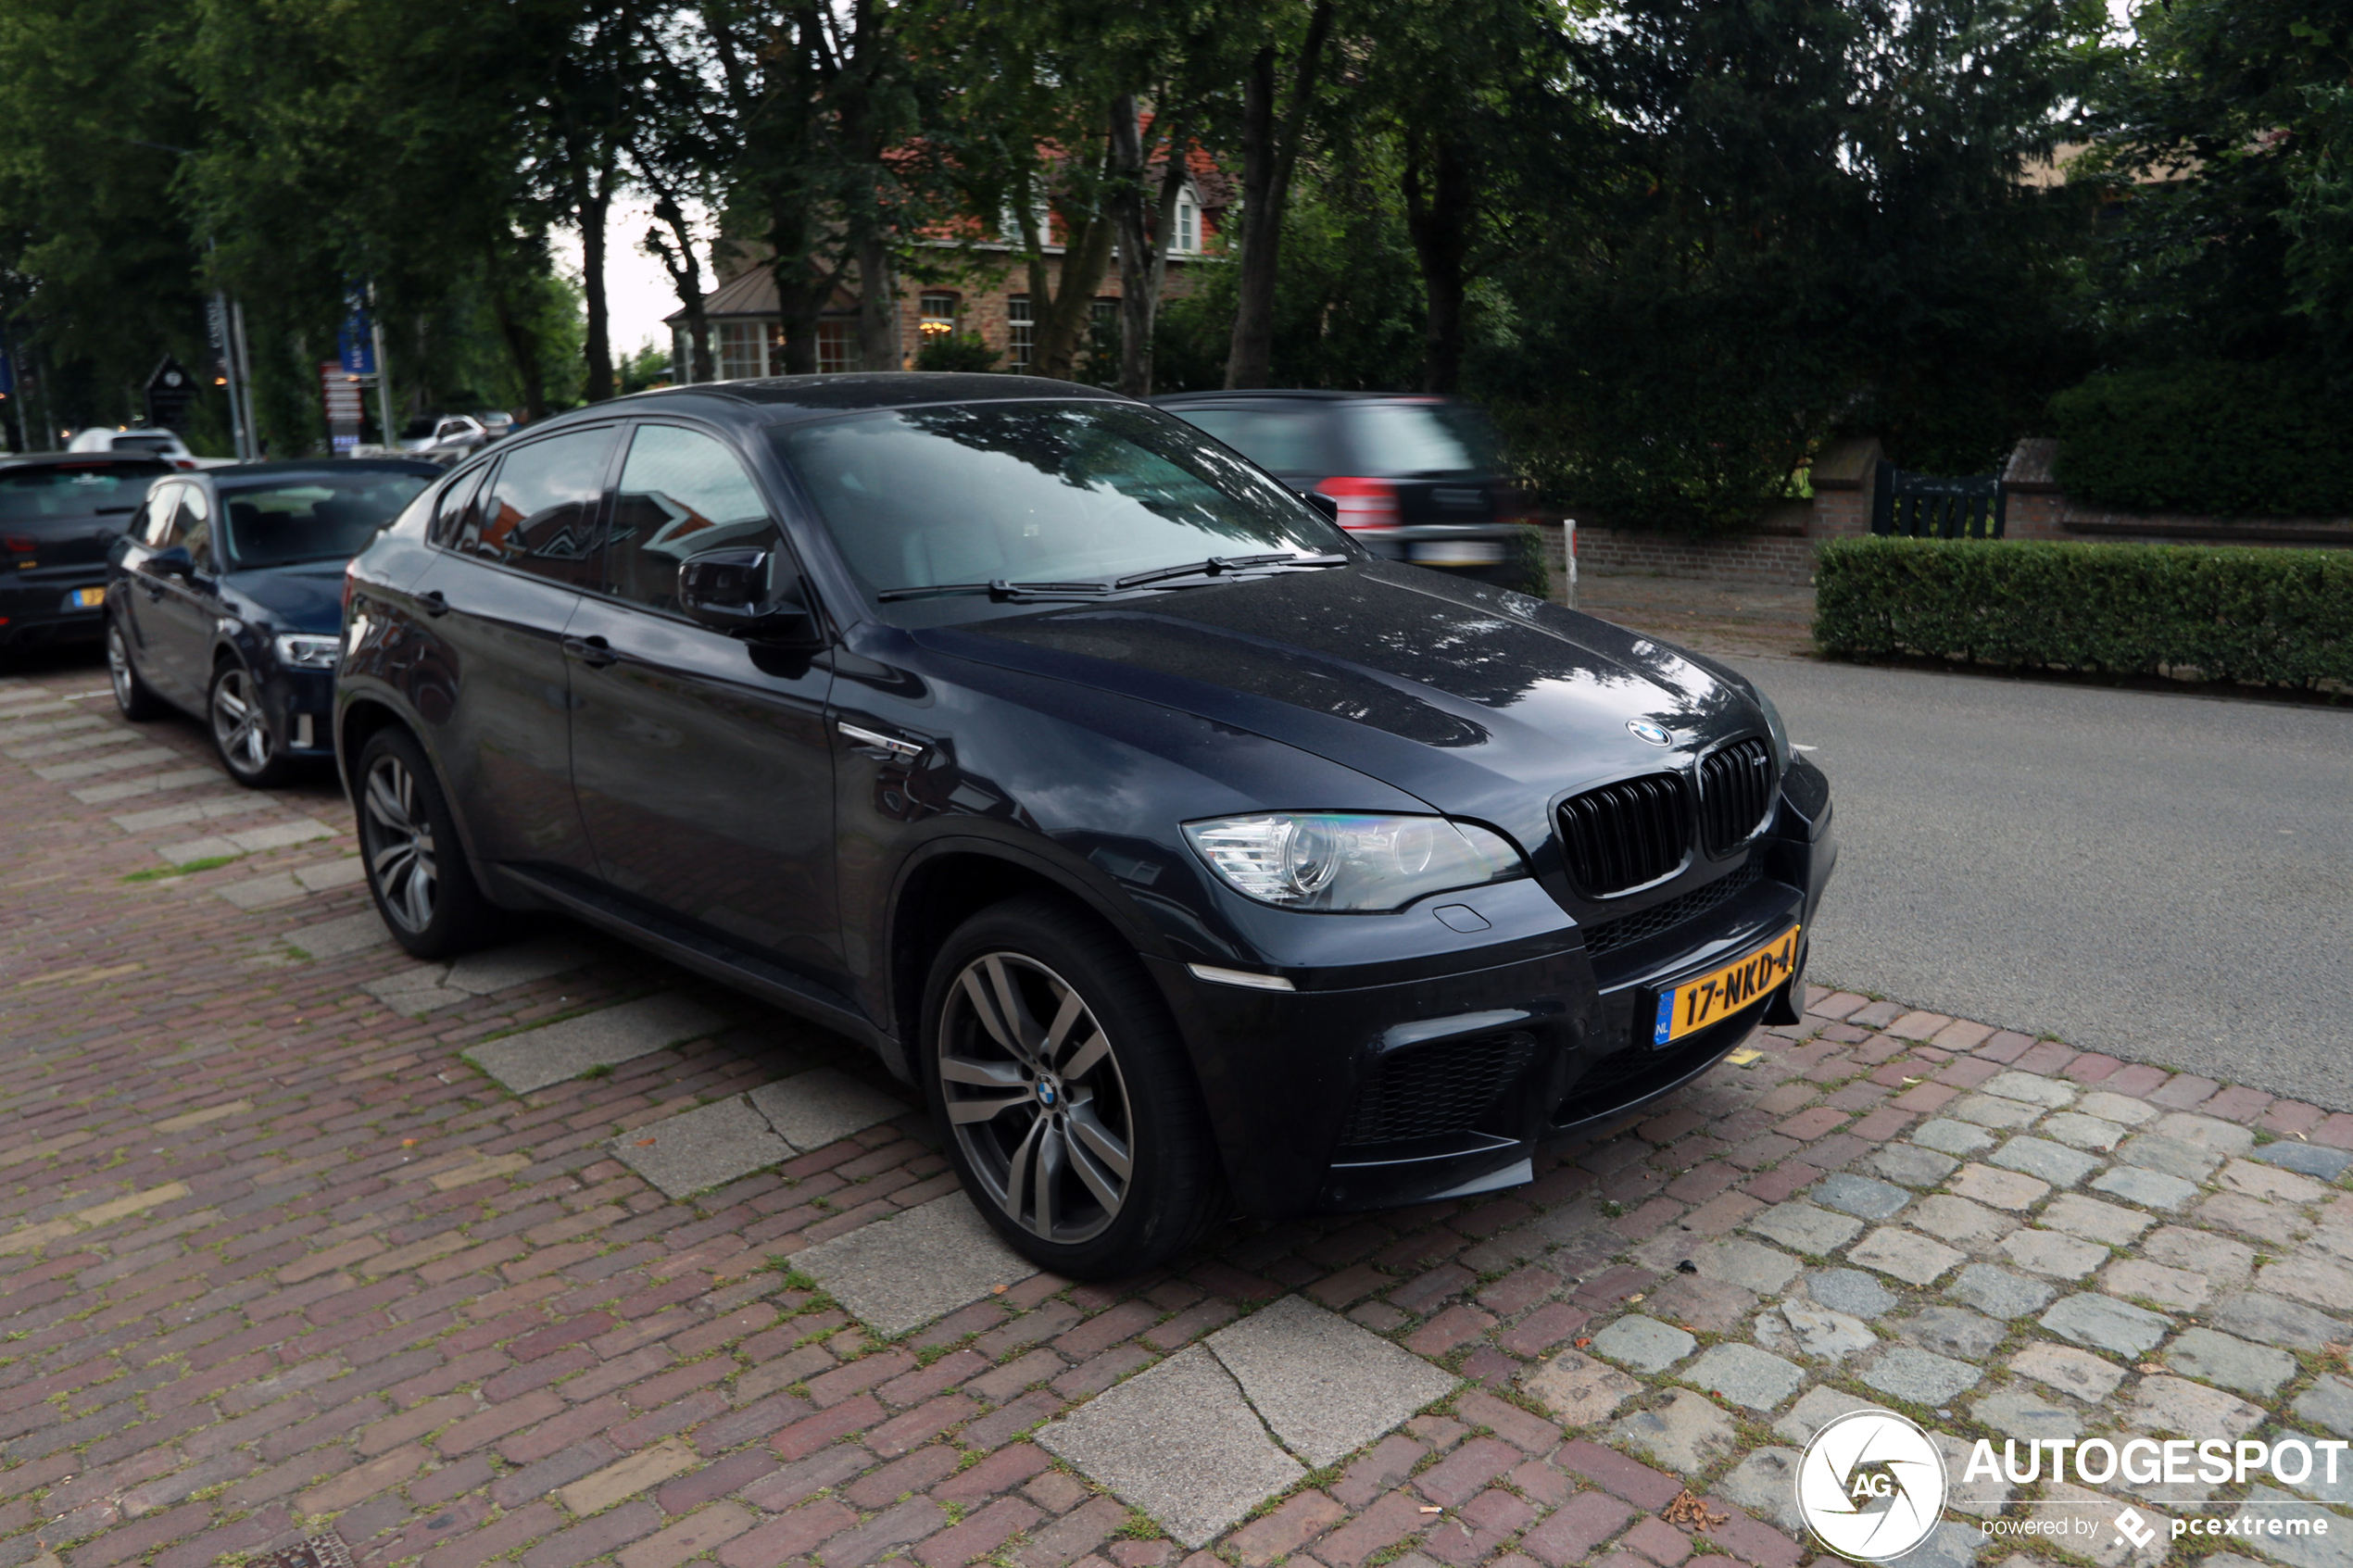 BMW X6 M E71 - 22 July 2021 - Autogespot